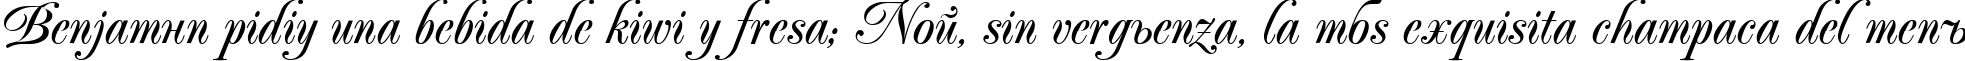 Пример написания шрифтом PopularScript текста на испанском